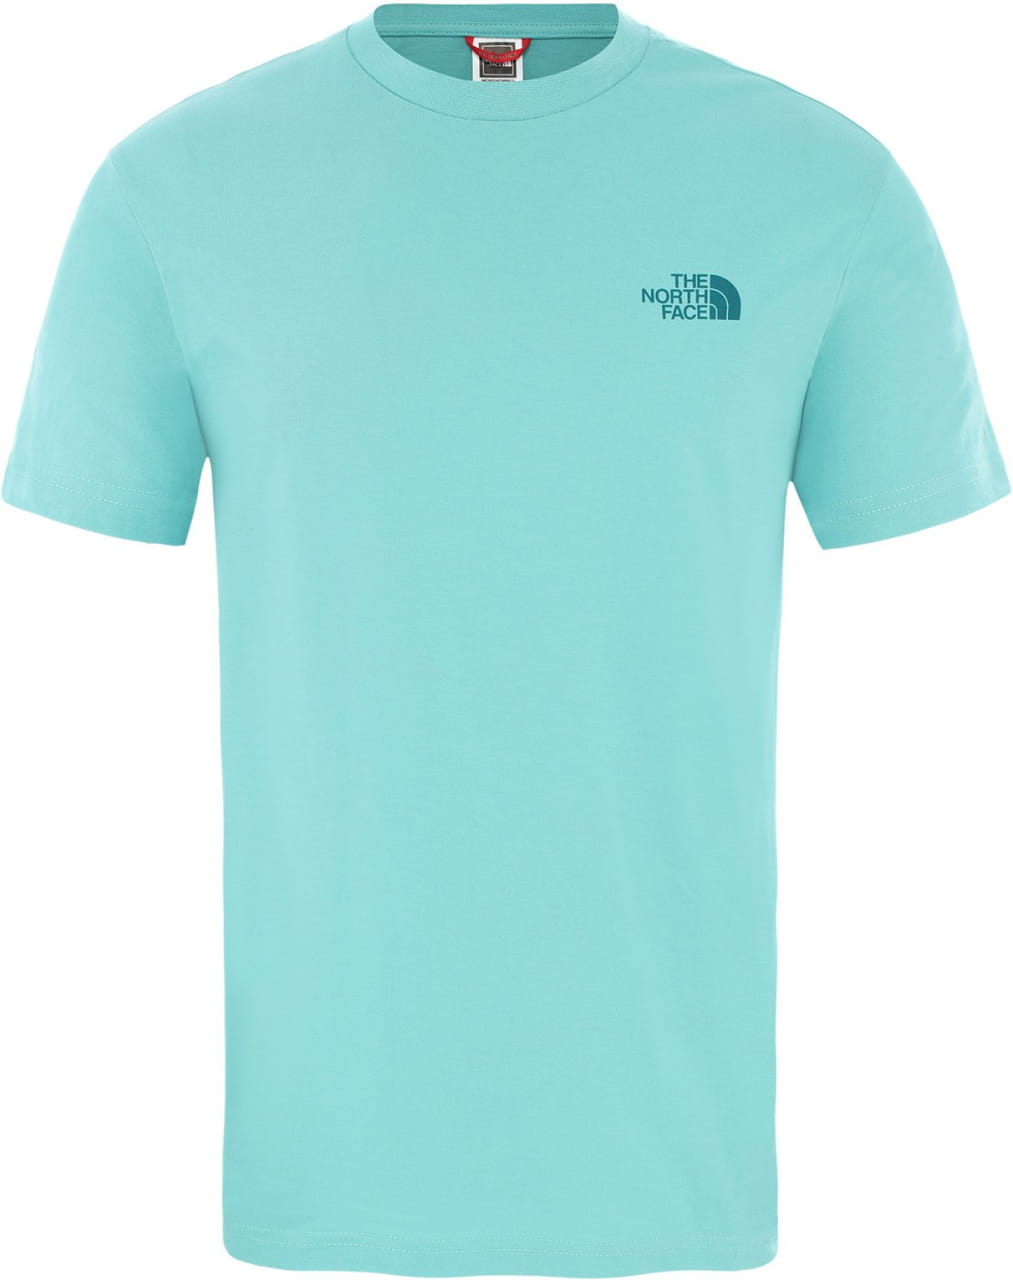 Koszulki The North Face Men's Simple Dome T-Shirt